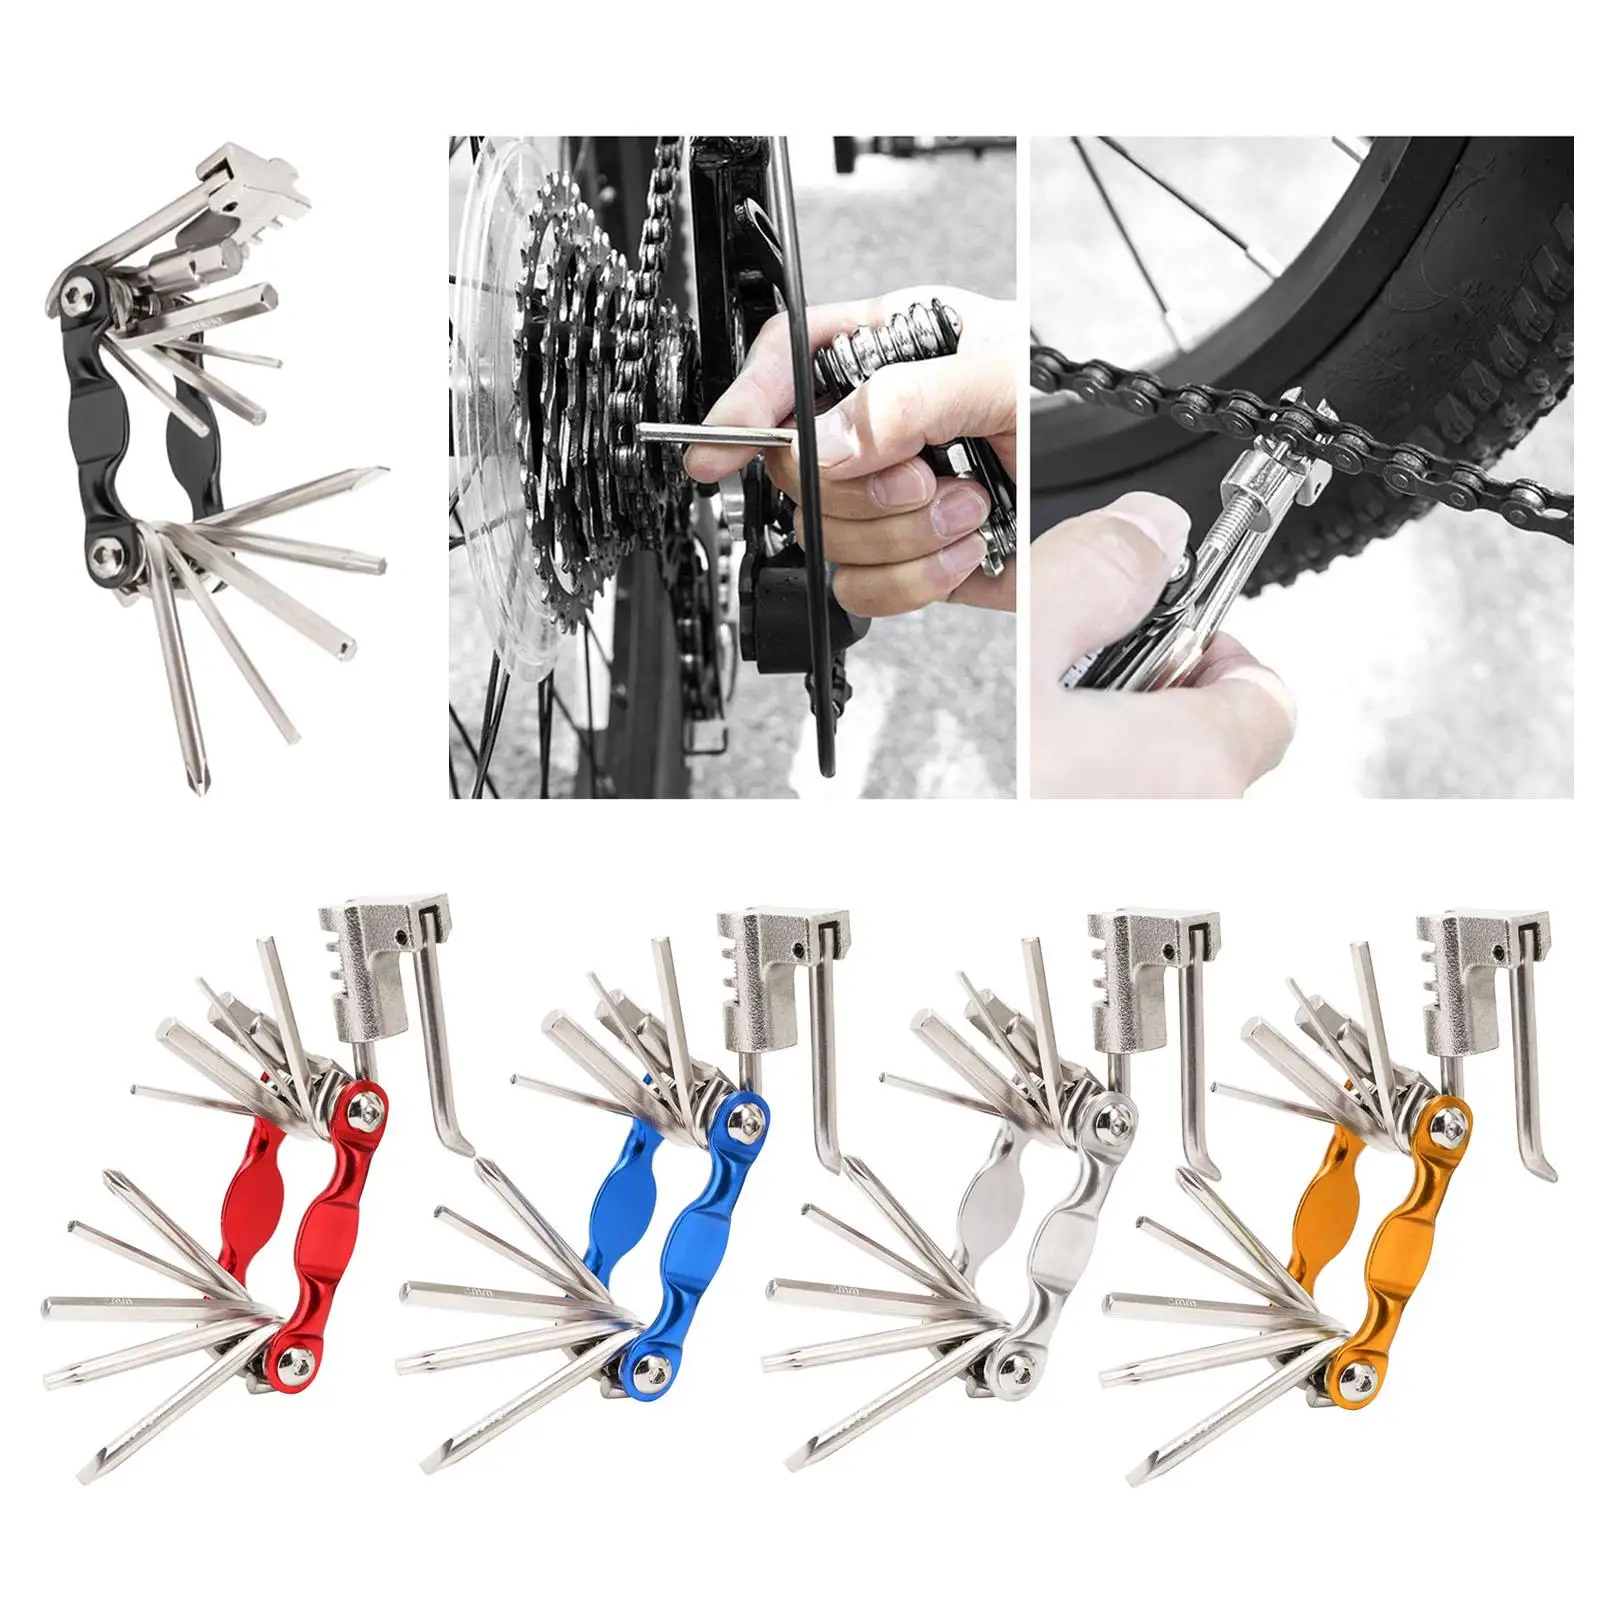 11 in 1 Kit Multifunction Bicycle Repair Tool Set Mini for Cycling